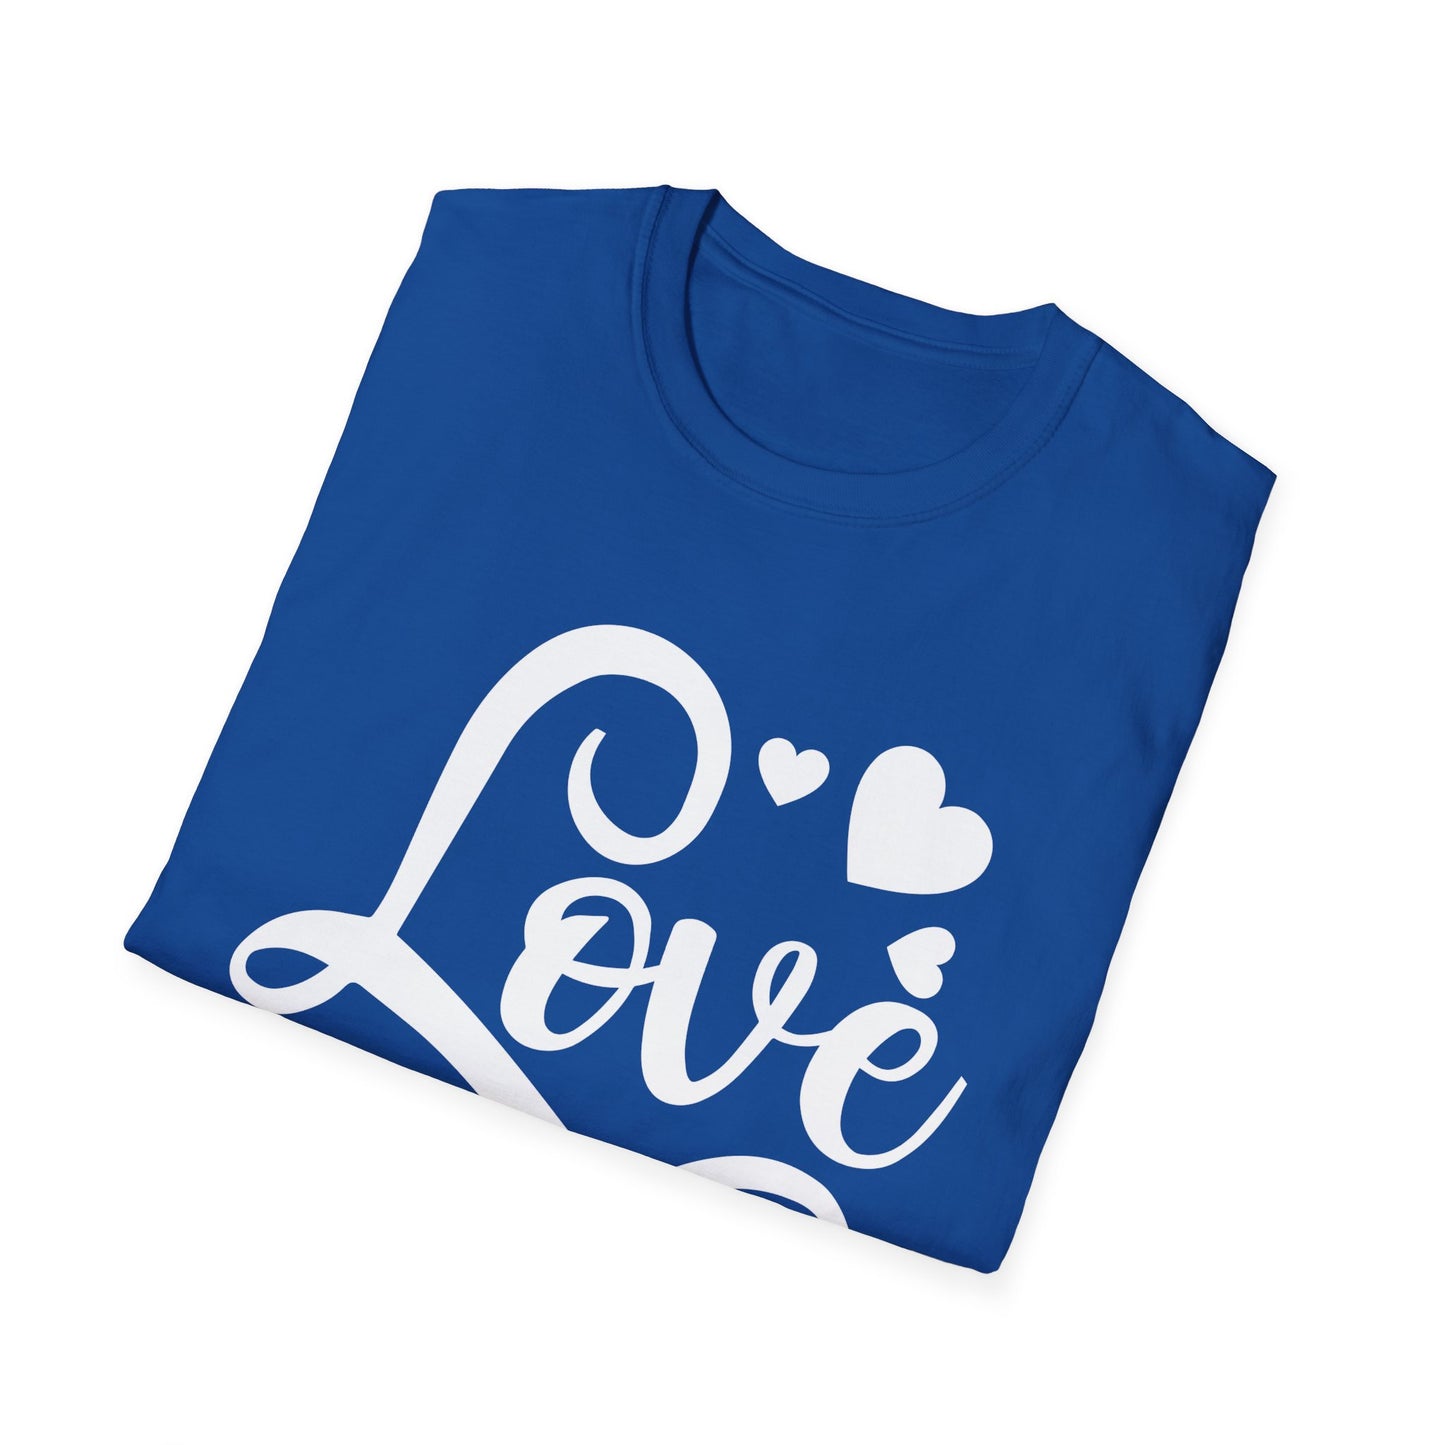 Love Unisex Softstyle T-Shirt